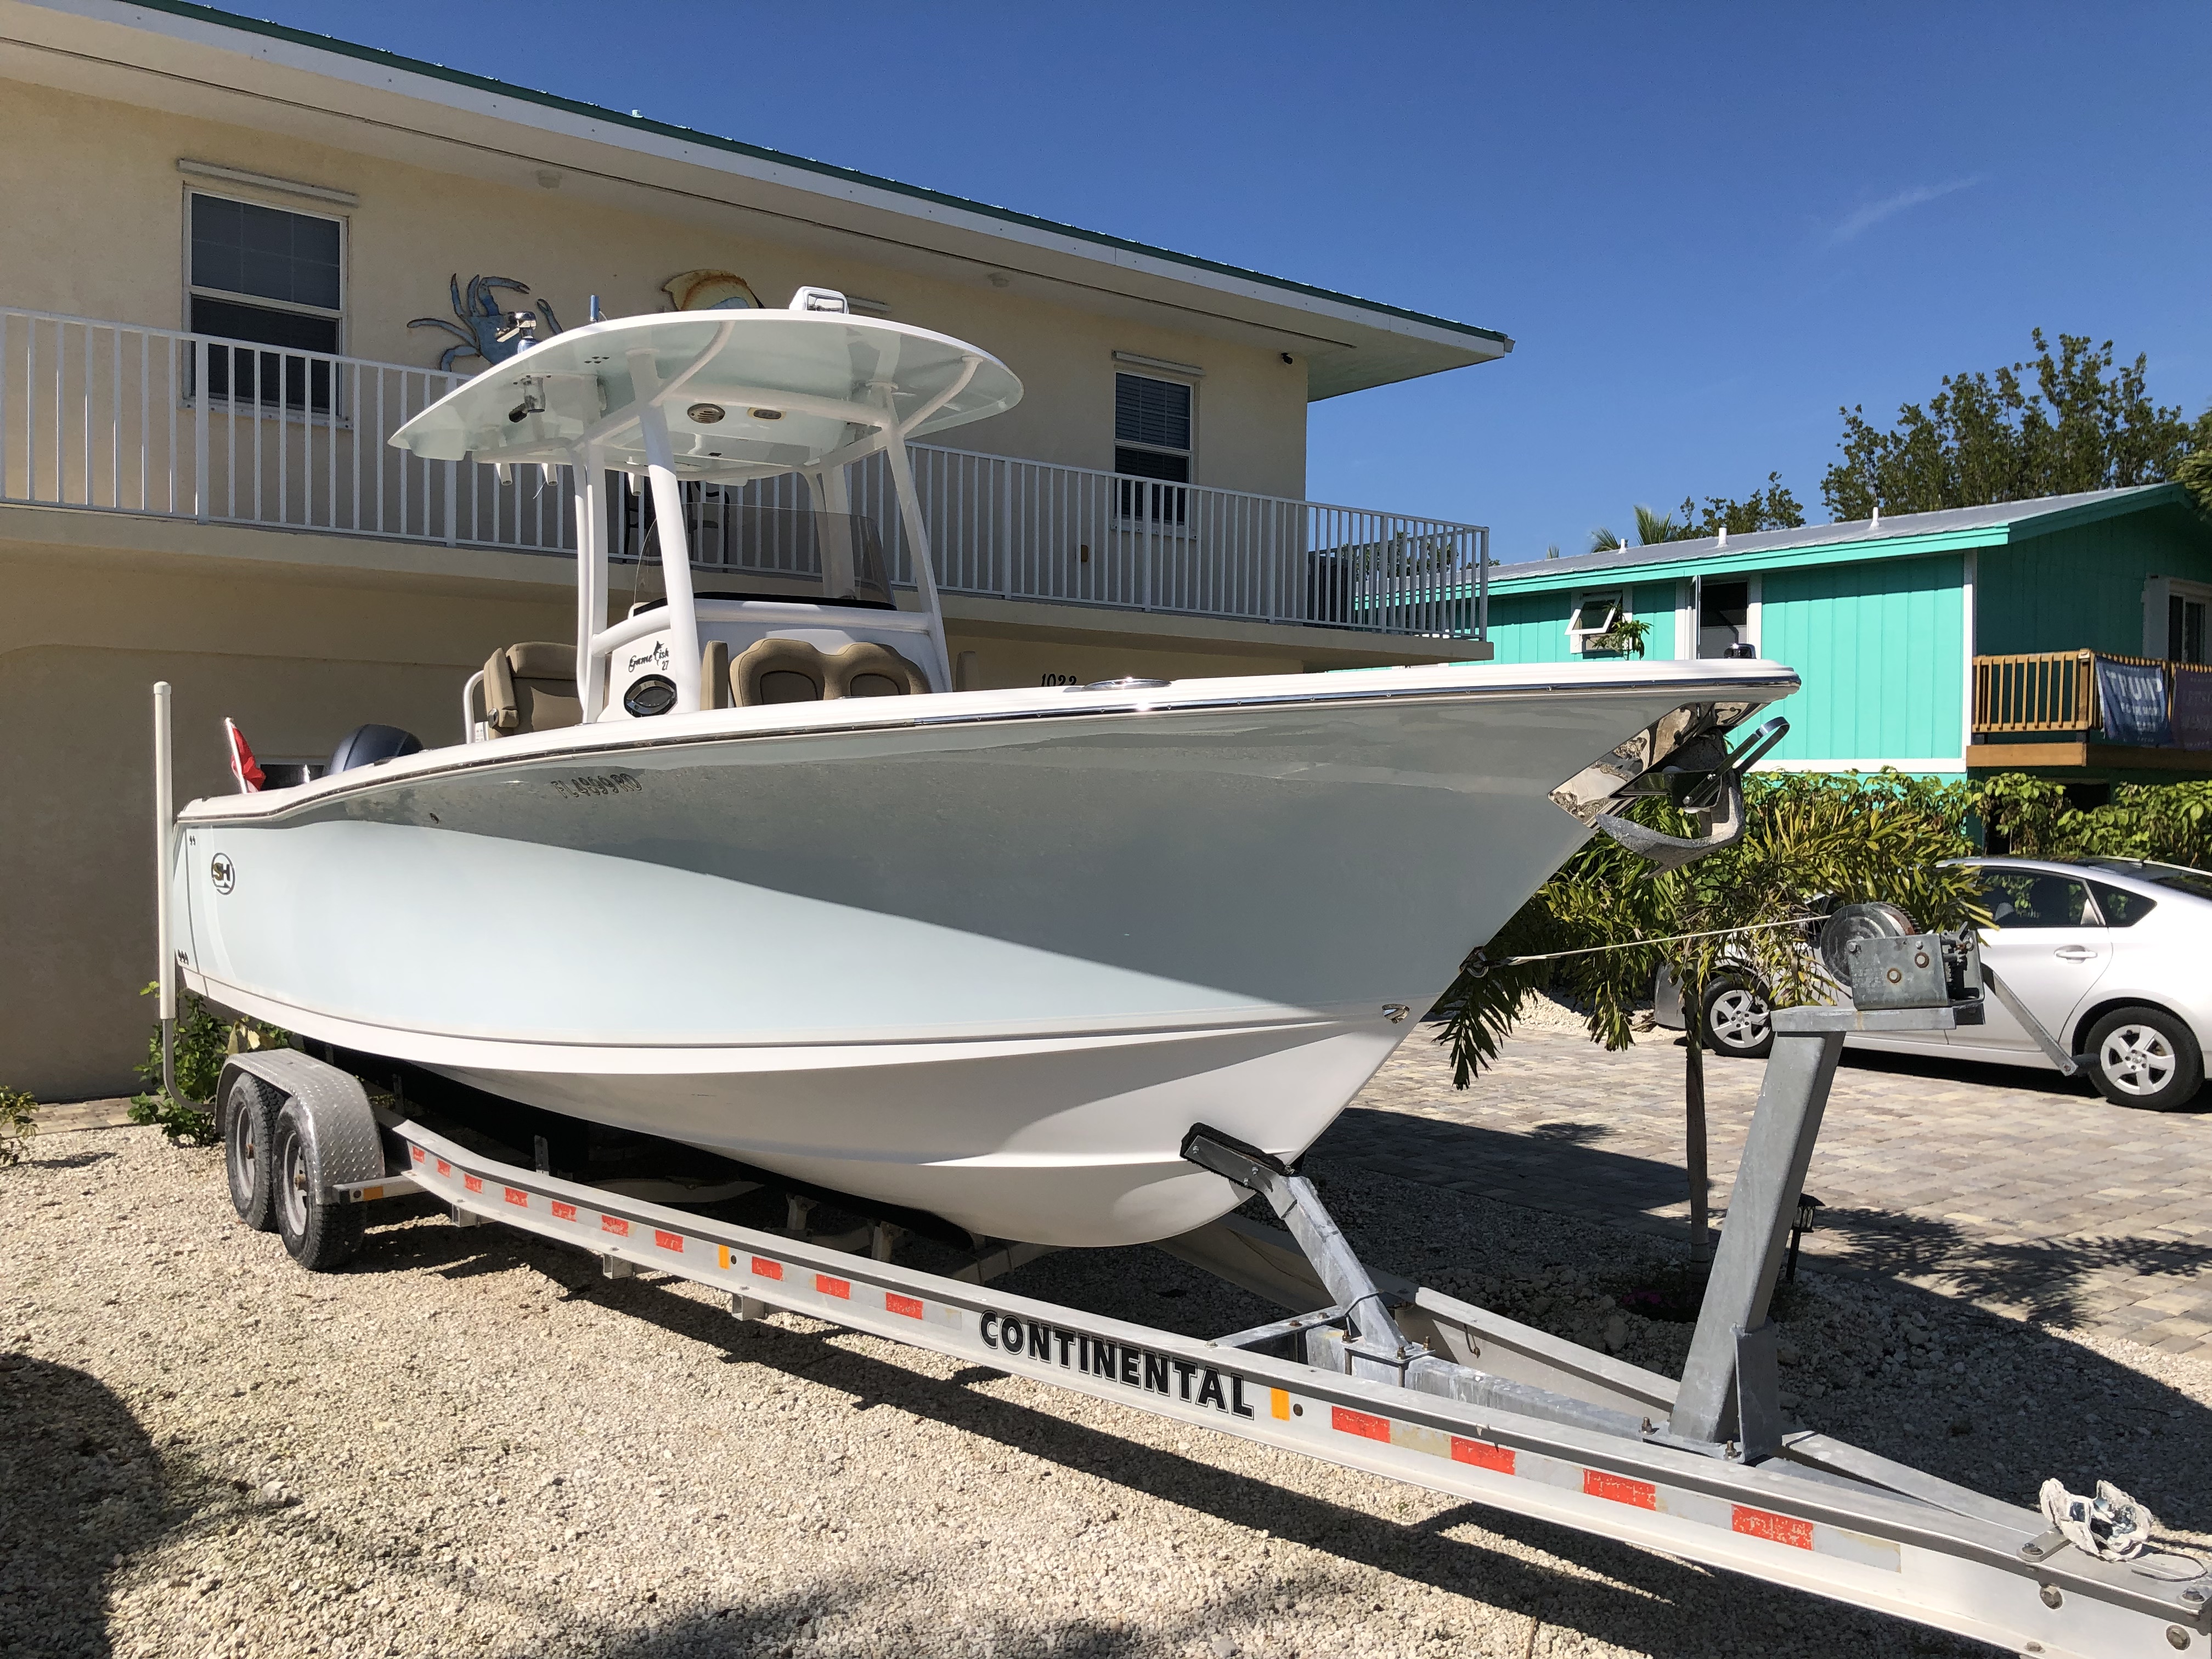 2016 Sea Hunt Gamefish 27CB Power boat for sale in Ramrod Key, FL - image 1 